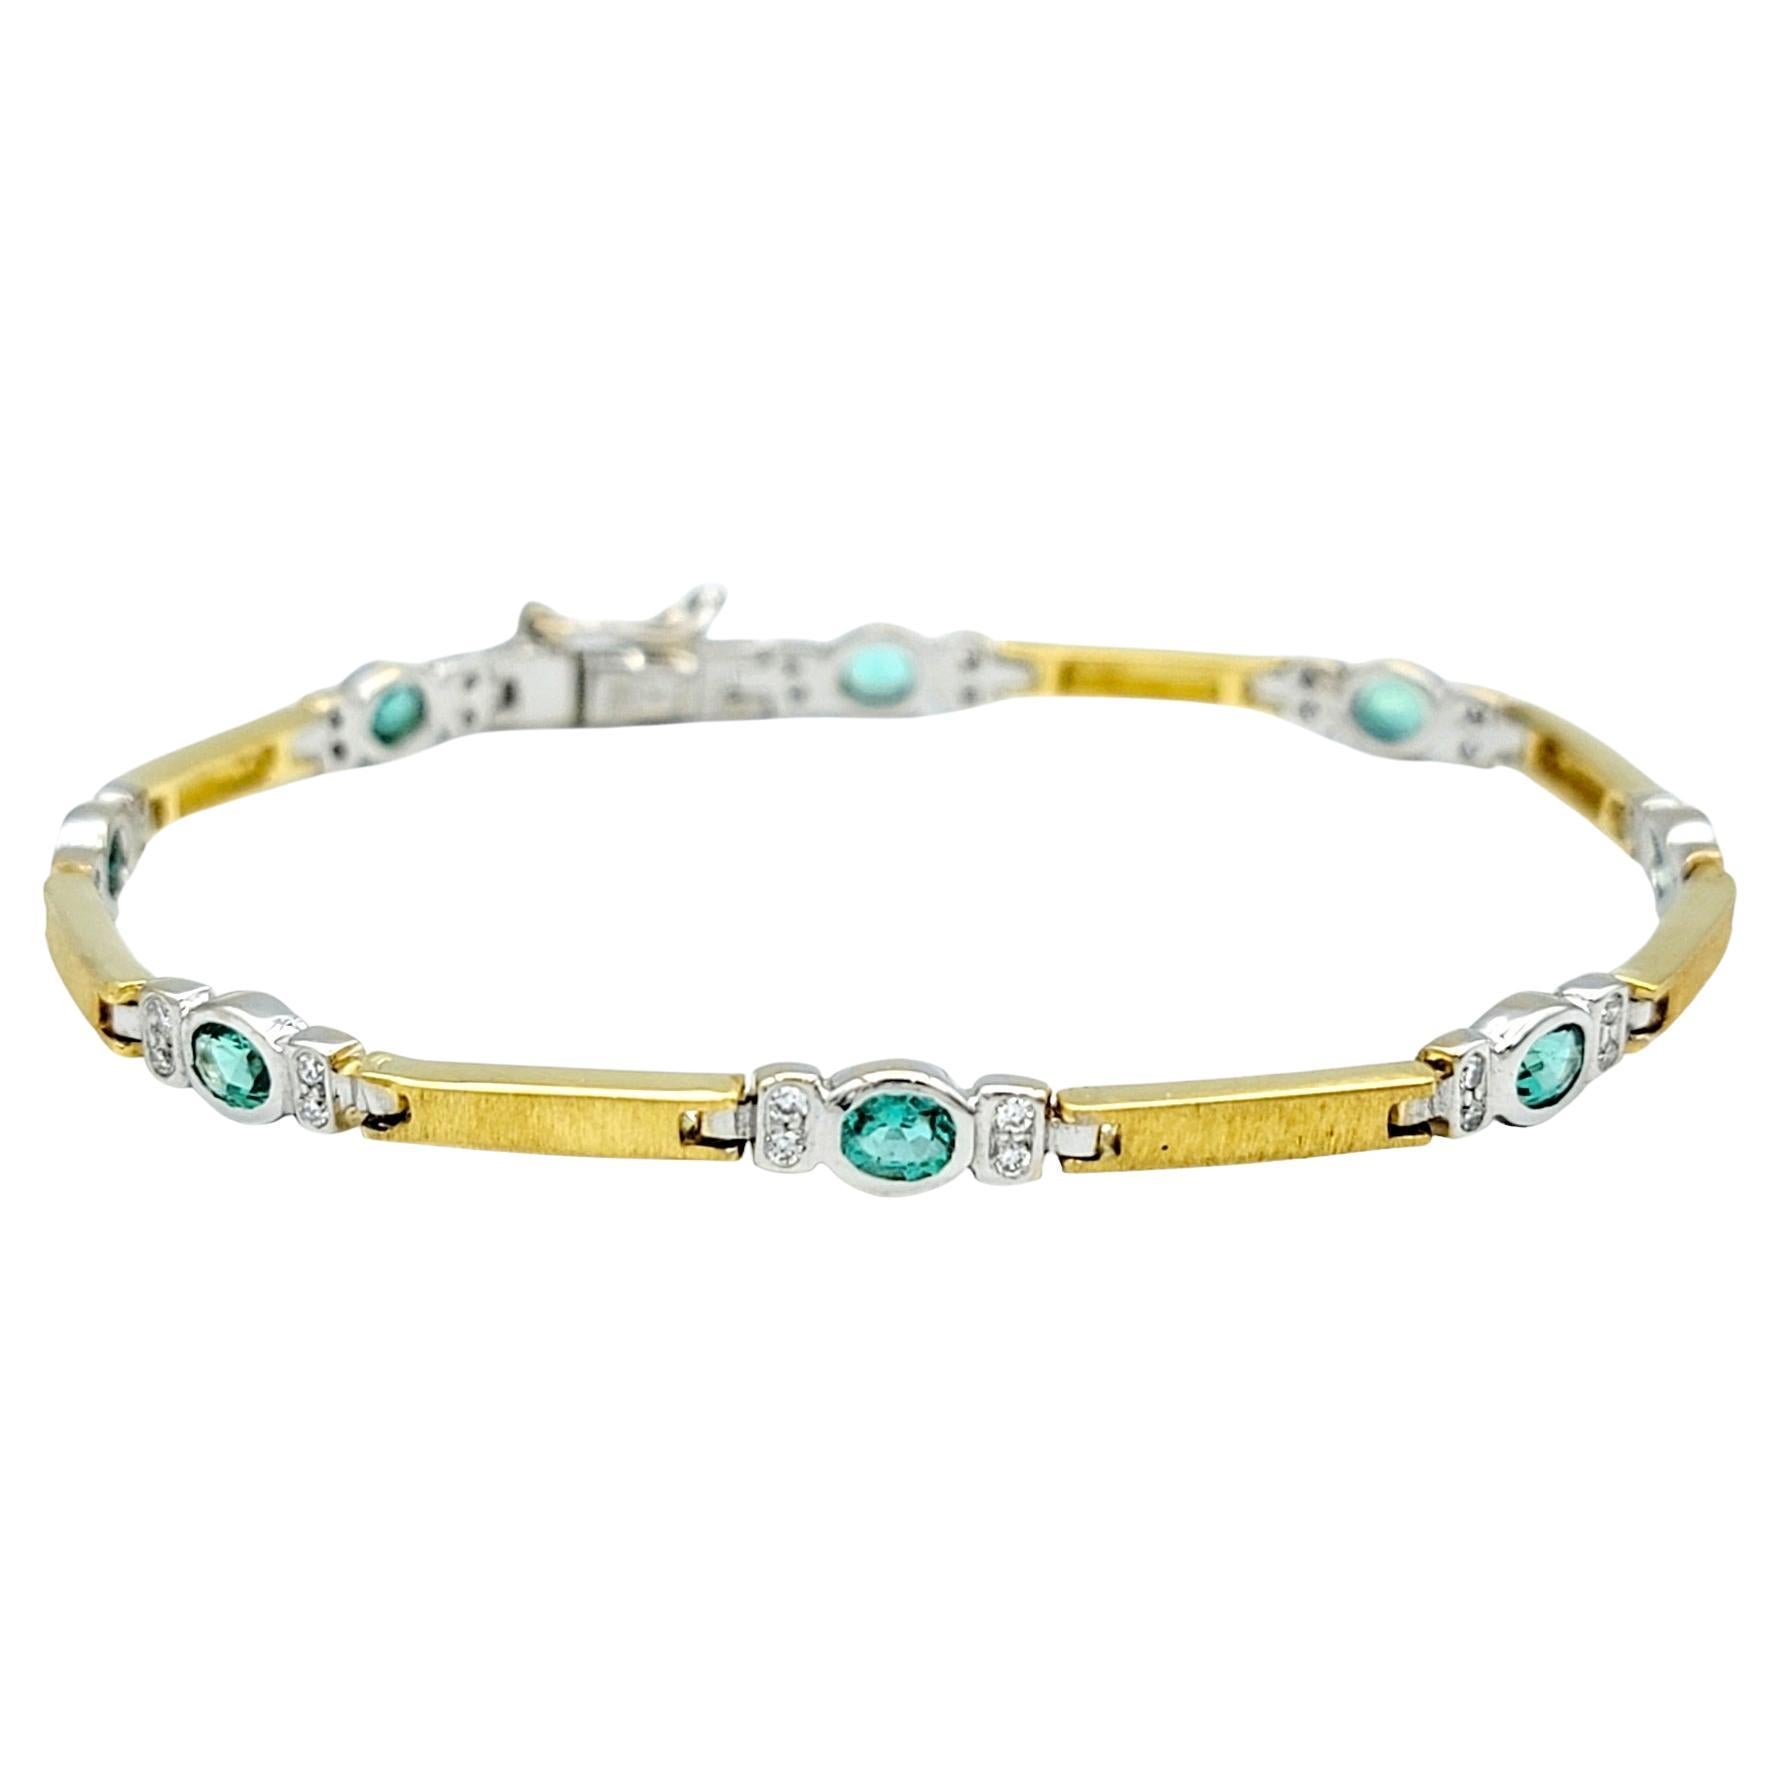 Blue-Green Tourmaline and Diamond Link Bracelet Set in Two-Tone 18 Karat Gold